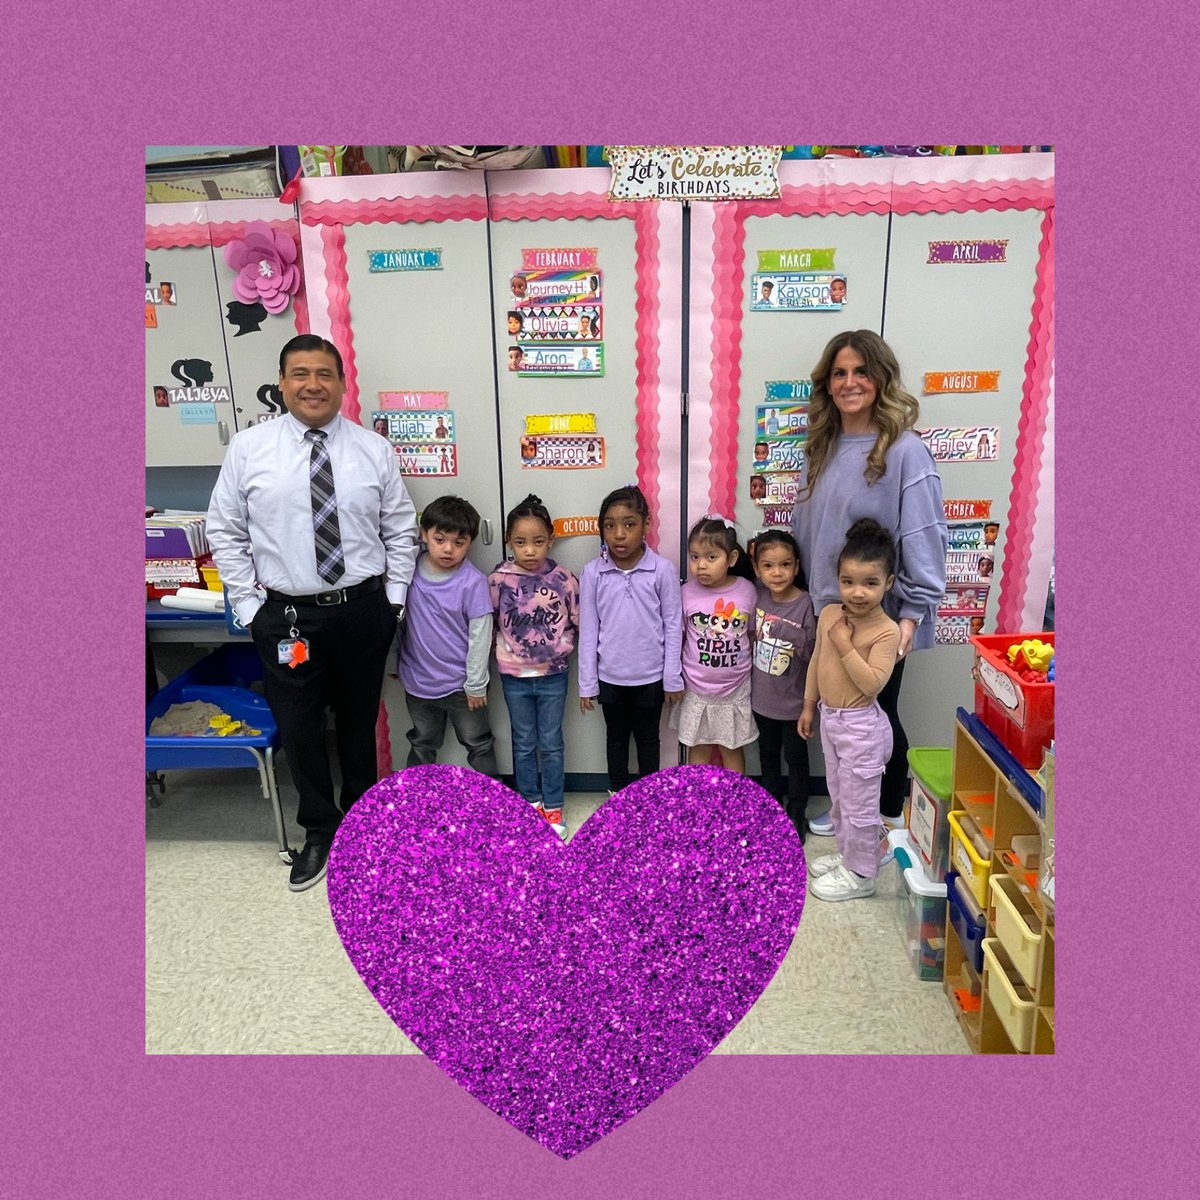 We wore purple in honor of military families at LHMCS! 
@DrF_Hernandez @MayorMikeSpano @RcollinsJudon @SuptQuezada @RevPresidentYPS @CityofYonkers @DrRPadilla
@YPScommunity @DOEChancellor
@yonkerspublicschools
@yft860
@AnibalSolerJr
@mbk
@mskyonkers